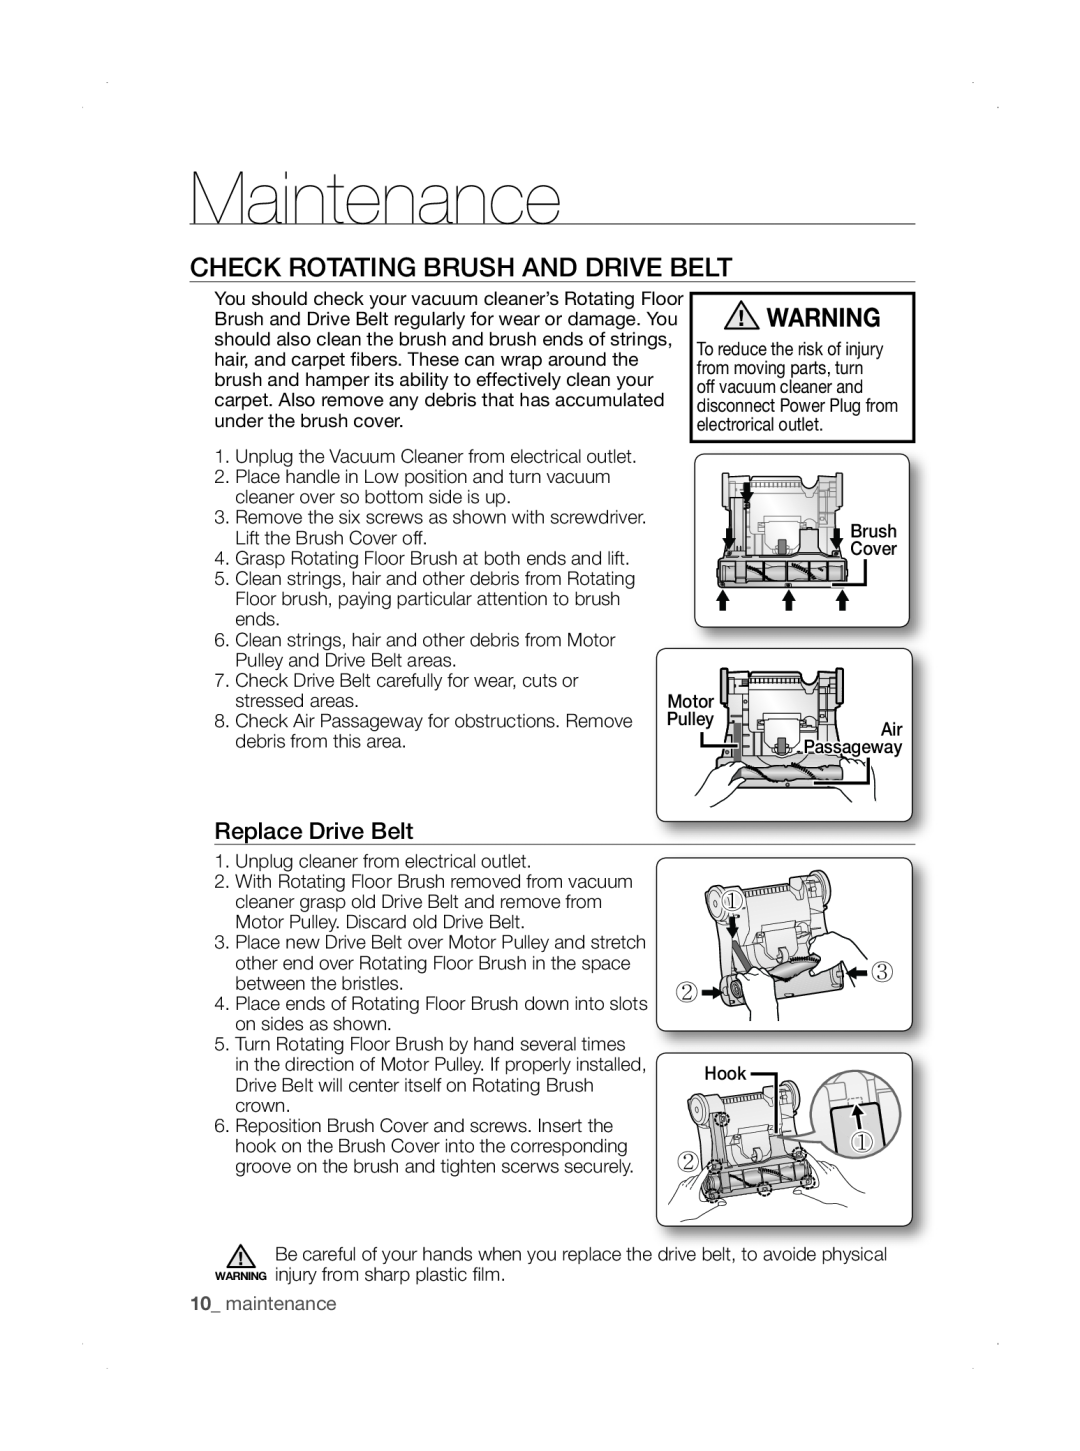 Samsung SU33 Series user manual Check Rotating Brush and Drive Belt, Replace Drive Belt, maintenance, Maintenance, ① ③ ② 